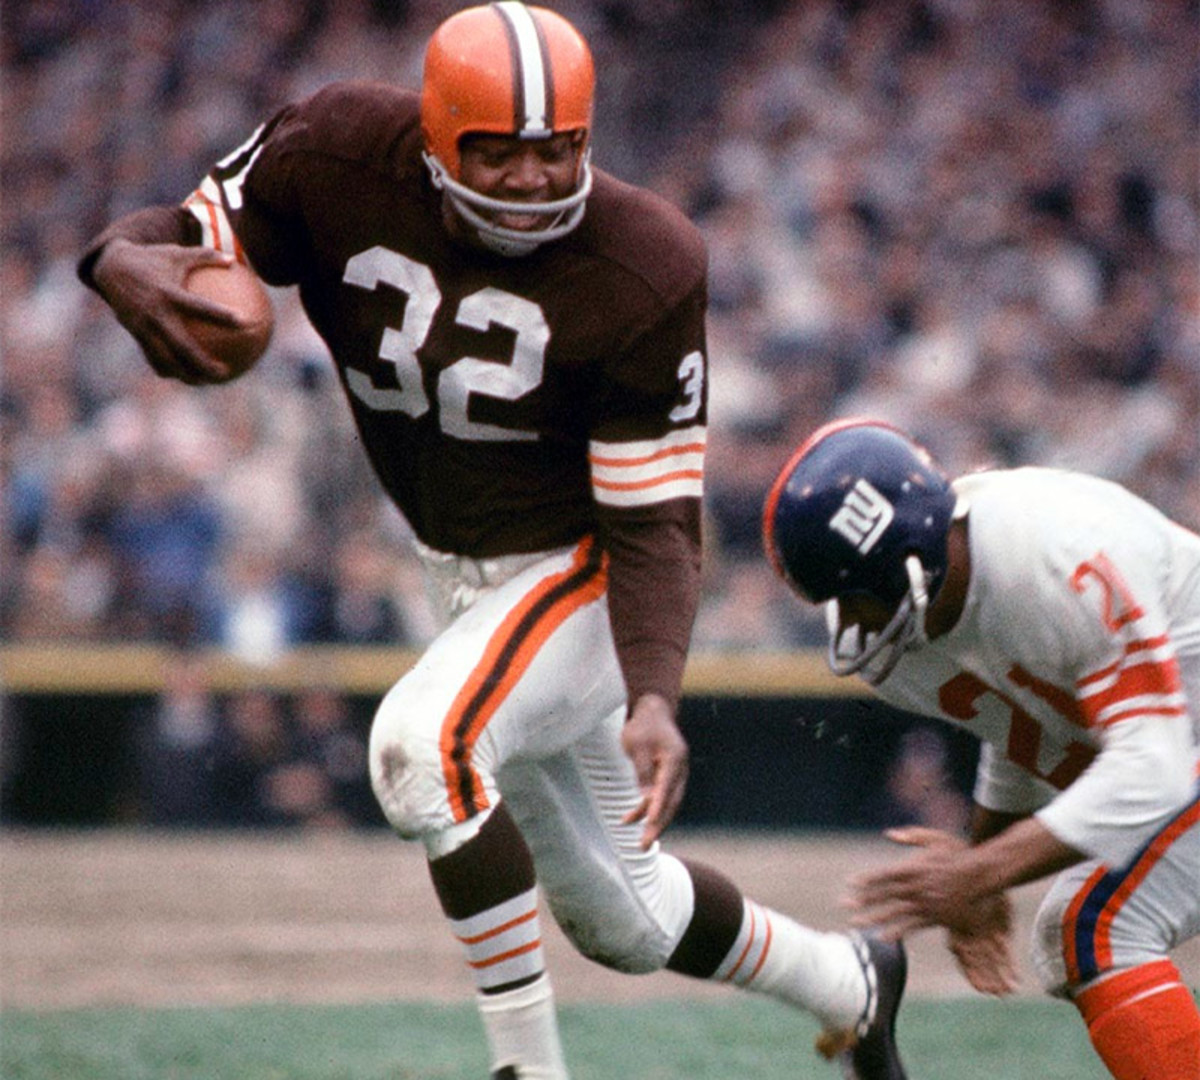 Remembering Jim Brown, Hall of Famer and NFL Legend.